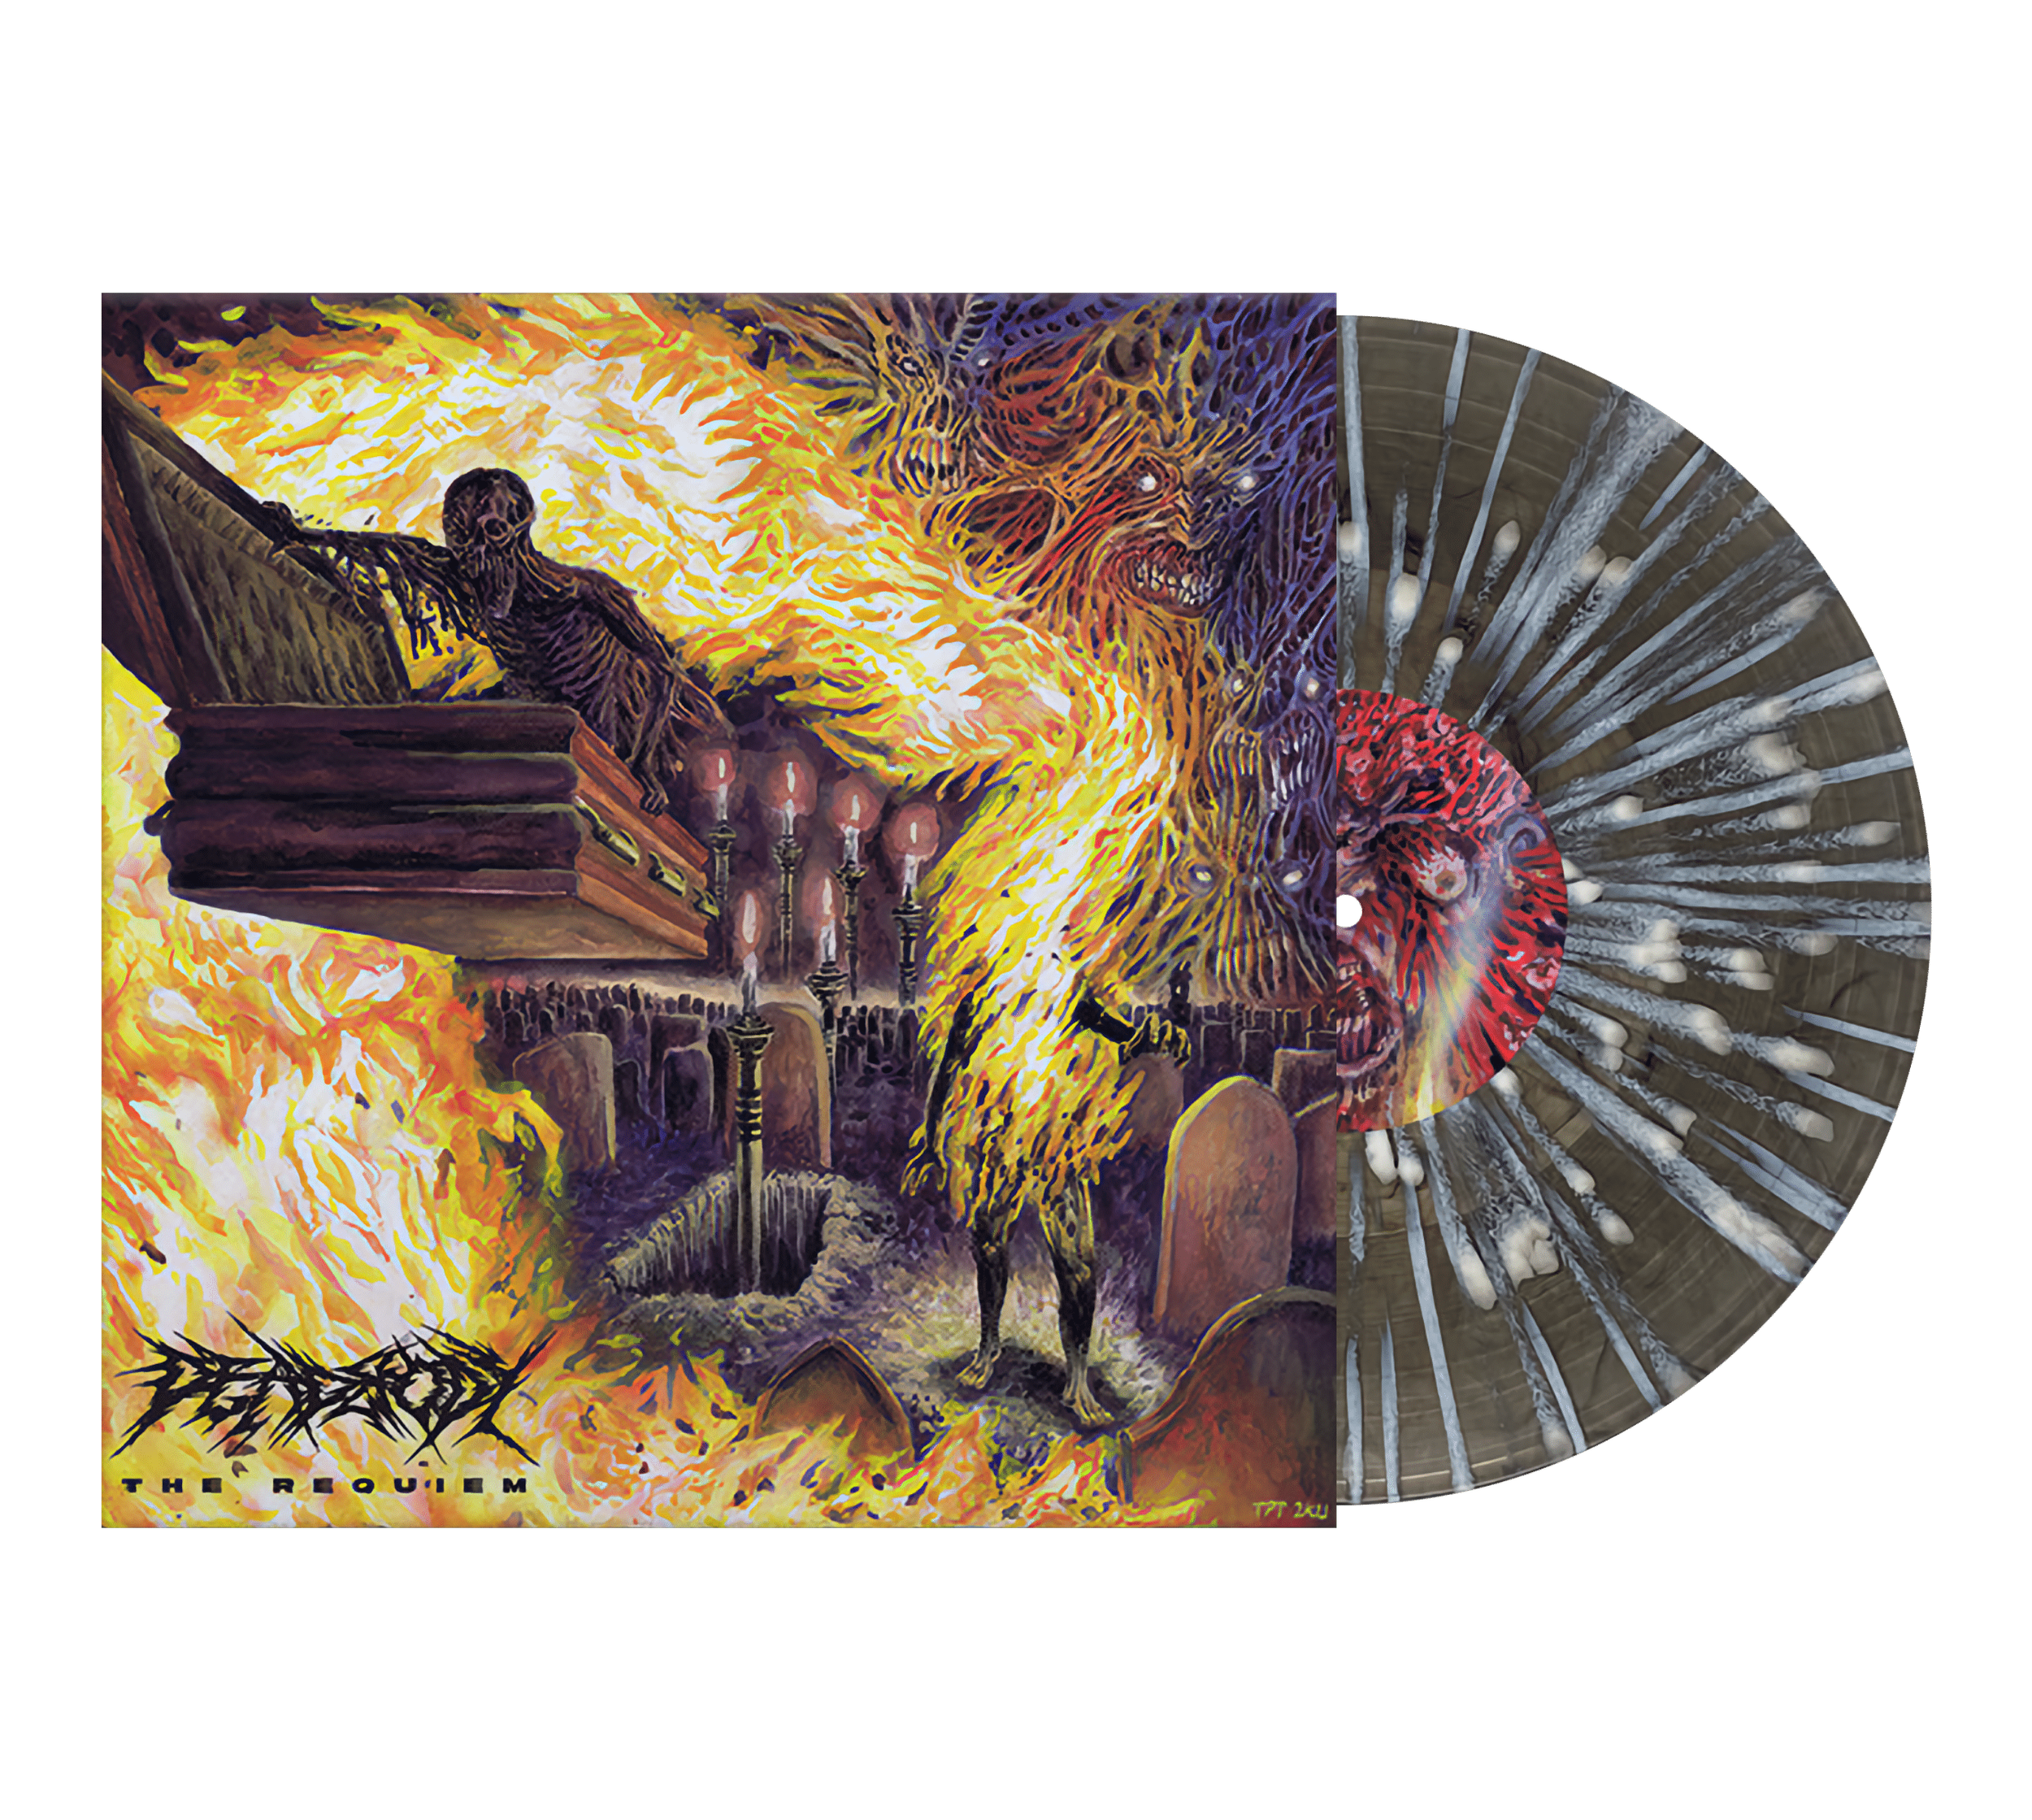 Deadbody - The Requiem - Vinyl - Smoke with White Splatter.png